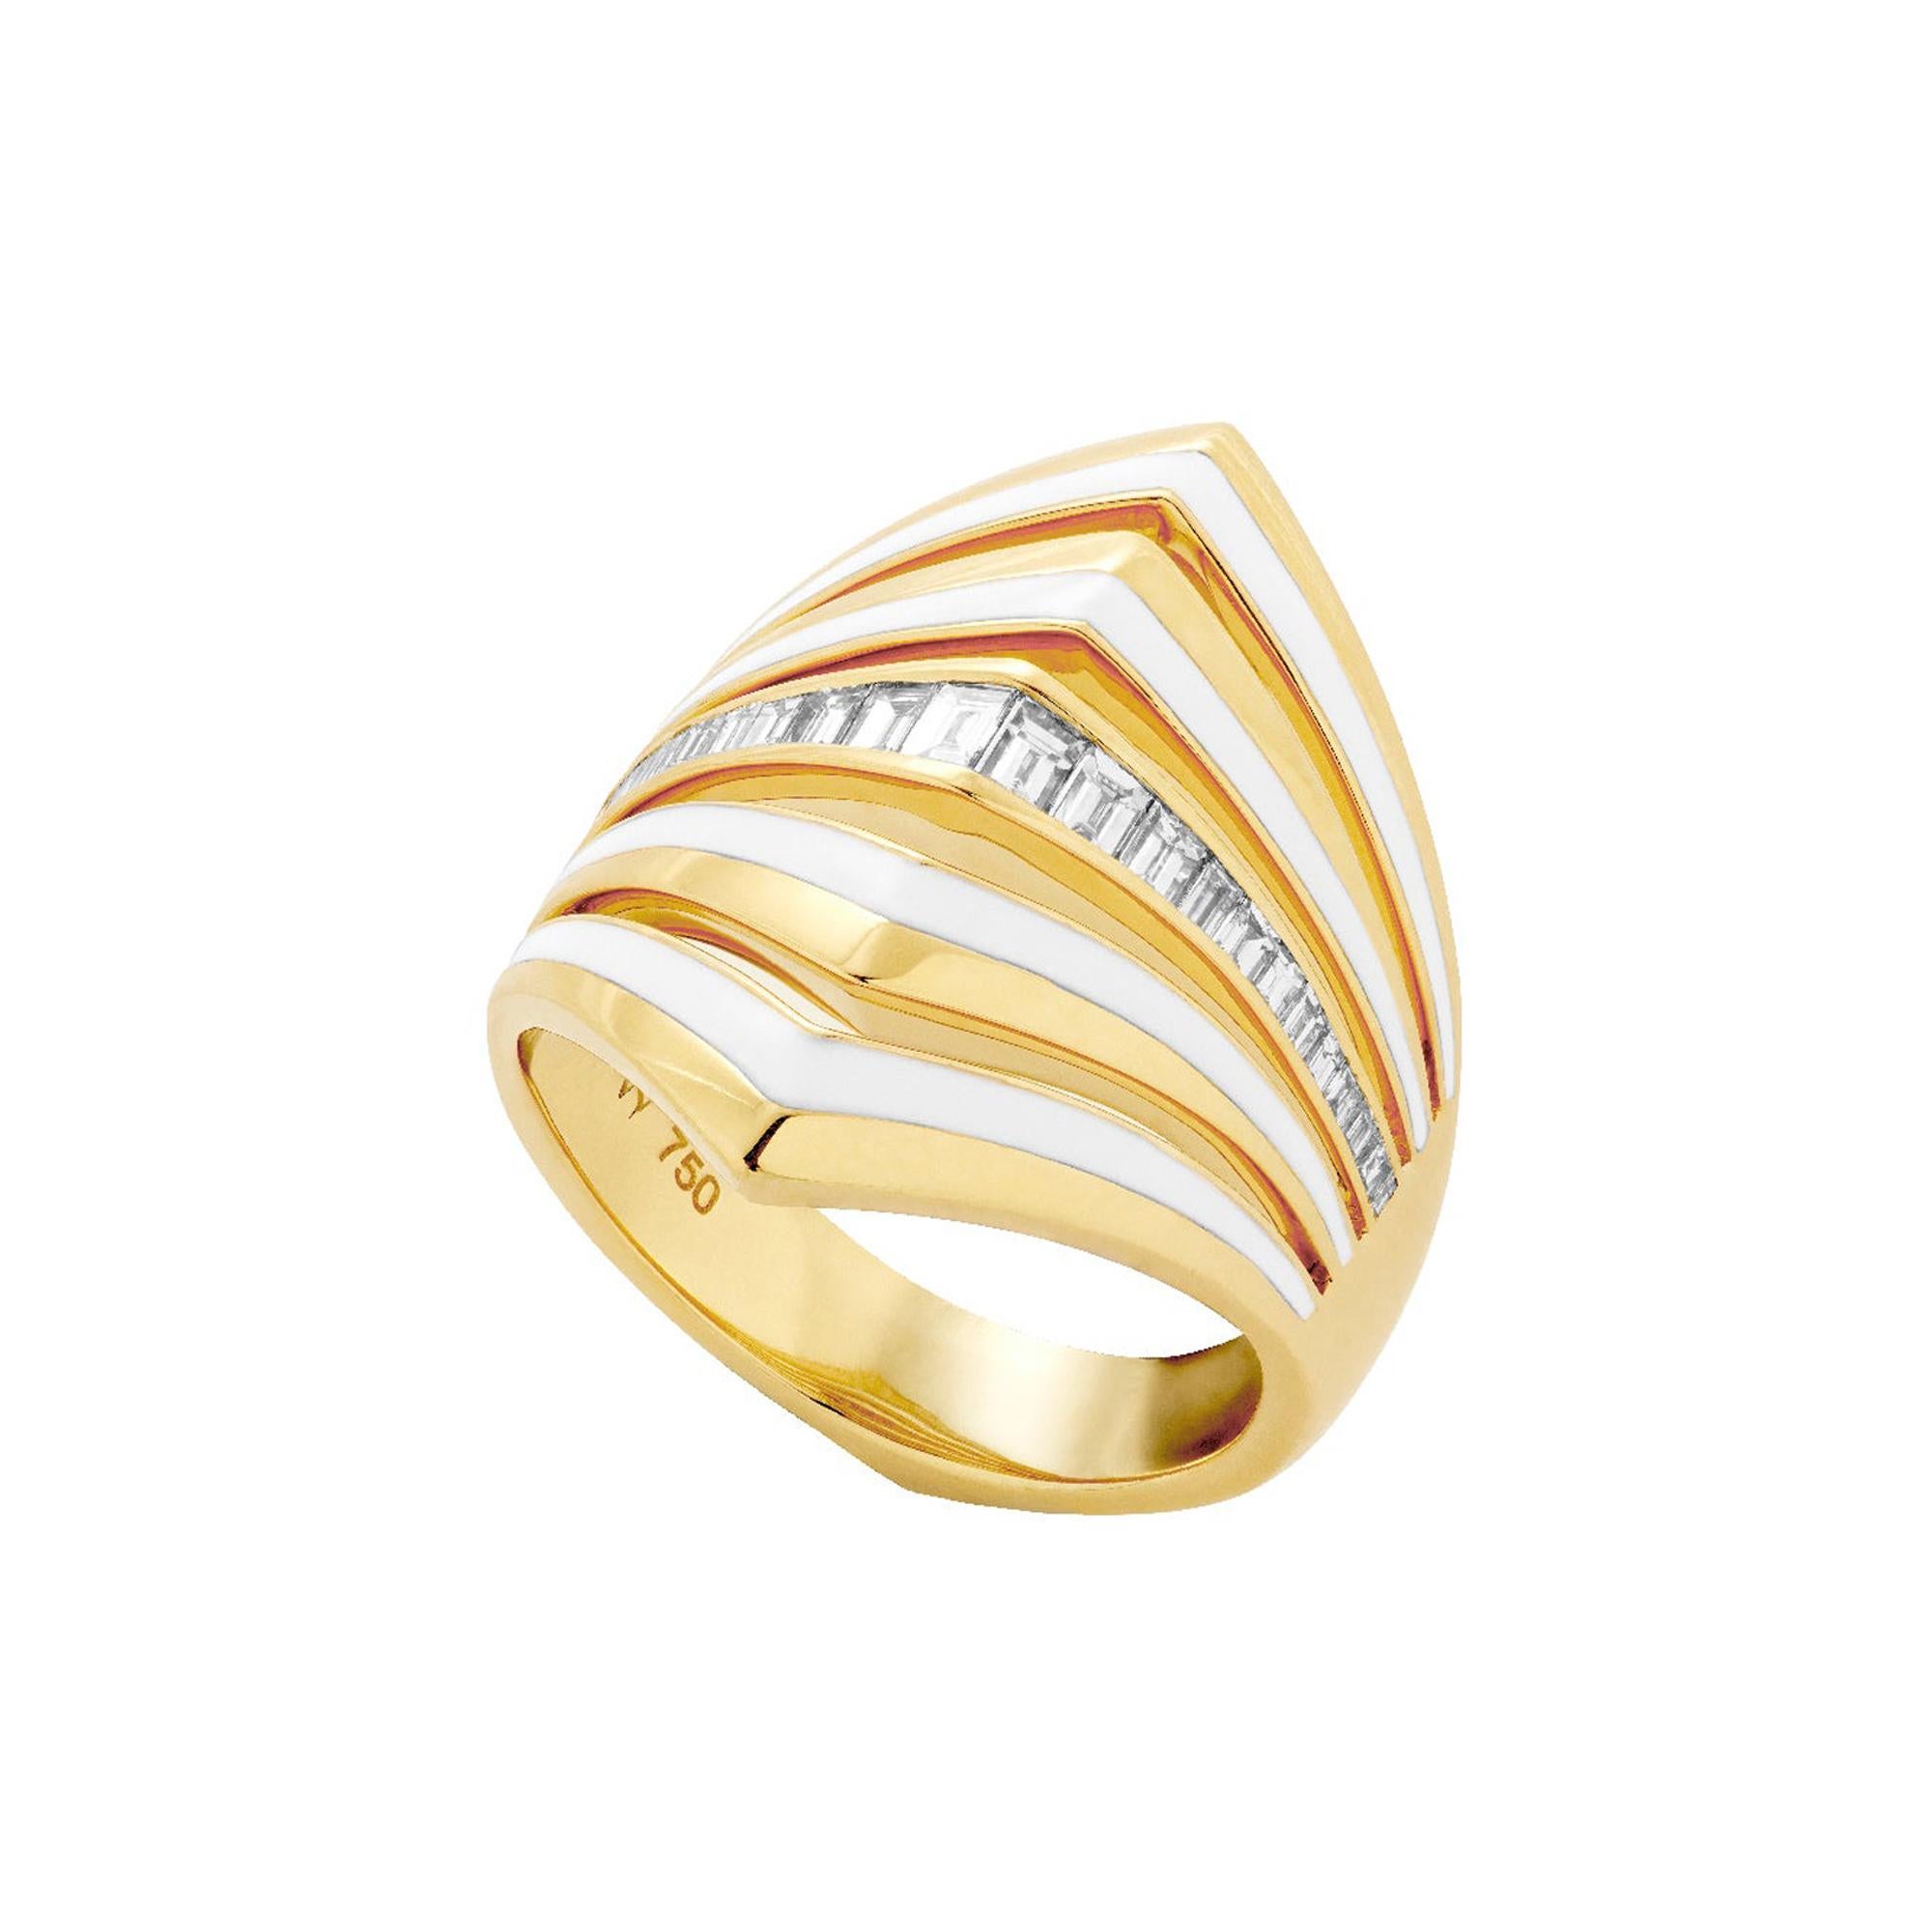 For Sale:  Stephen Webster Vertigo Gaining Perspective 18 Carat Gold and Diamond Ring